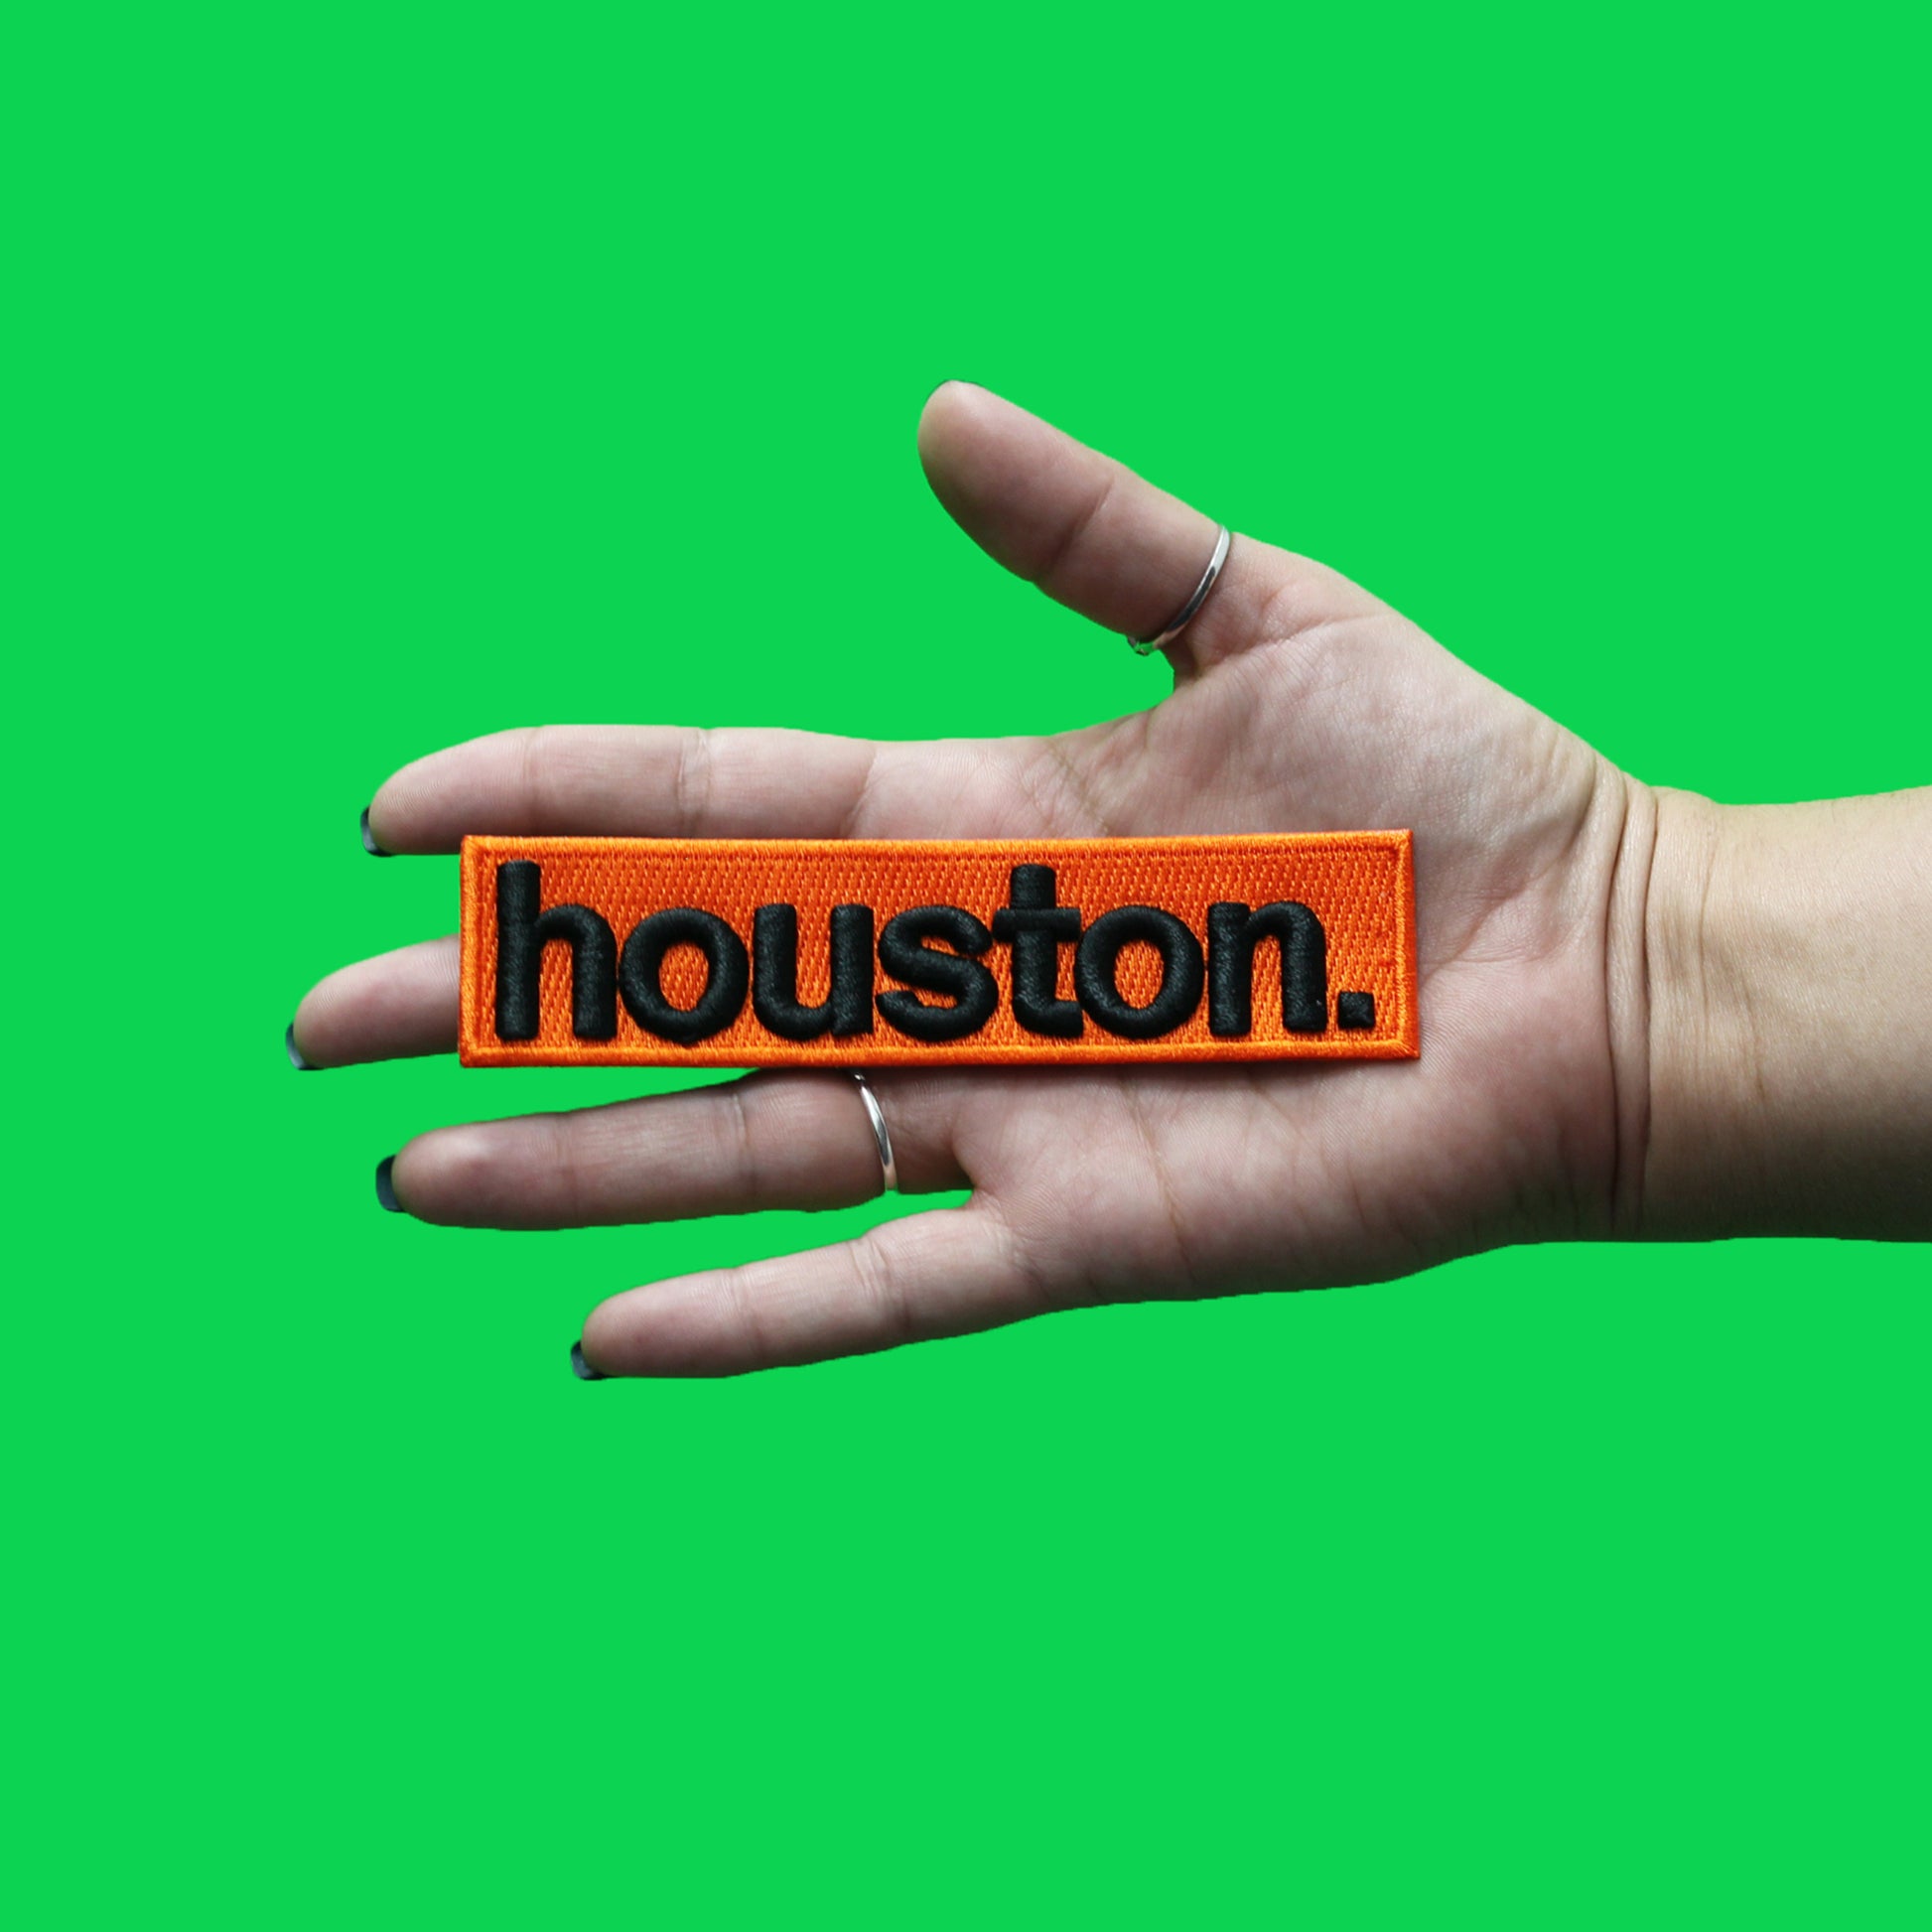 Orange City Of Houston Texas Puff Raised Box Logo Embroidered Iron on Patch 